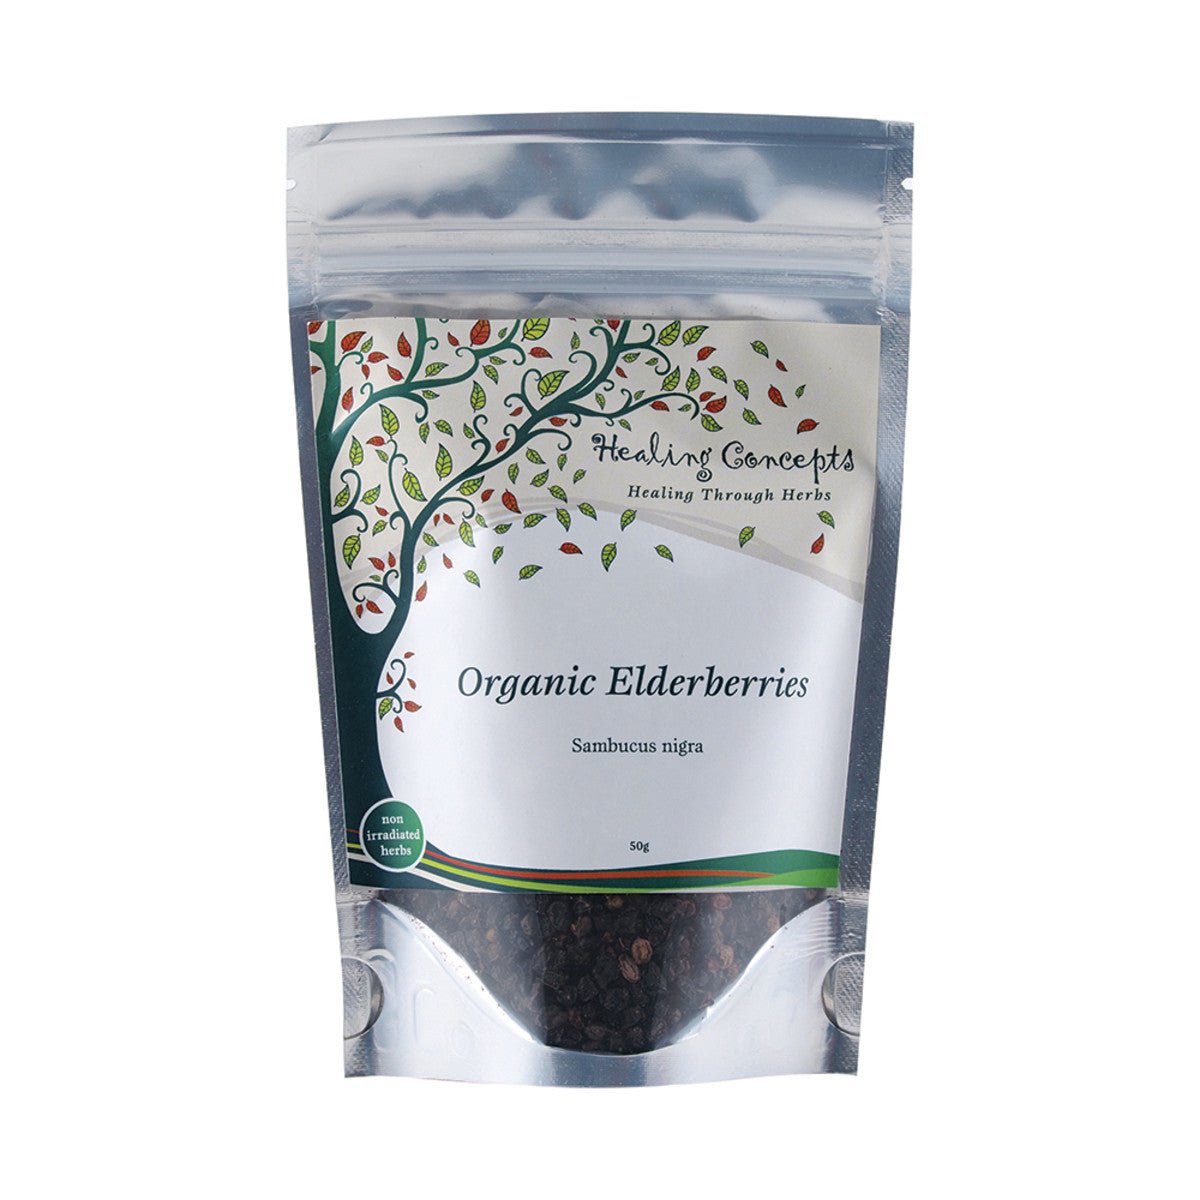 HEALING CONCEPTS Organic Elderberries 50g - Dr Earth - Drinks